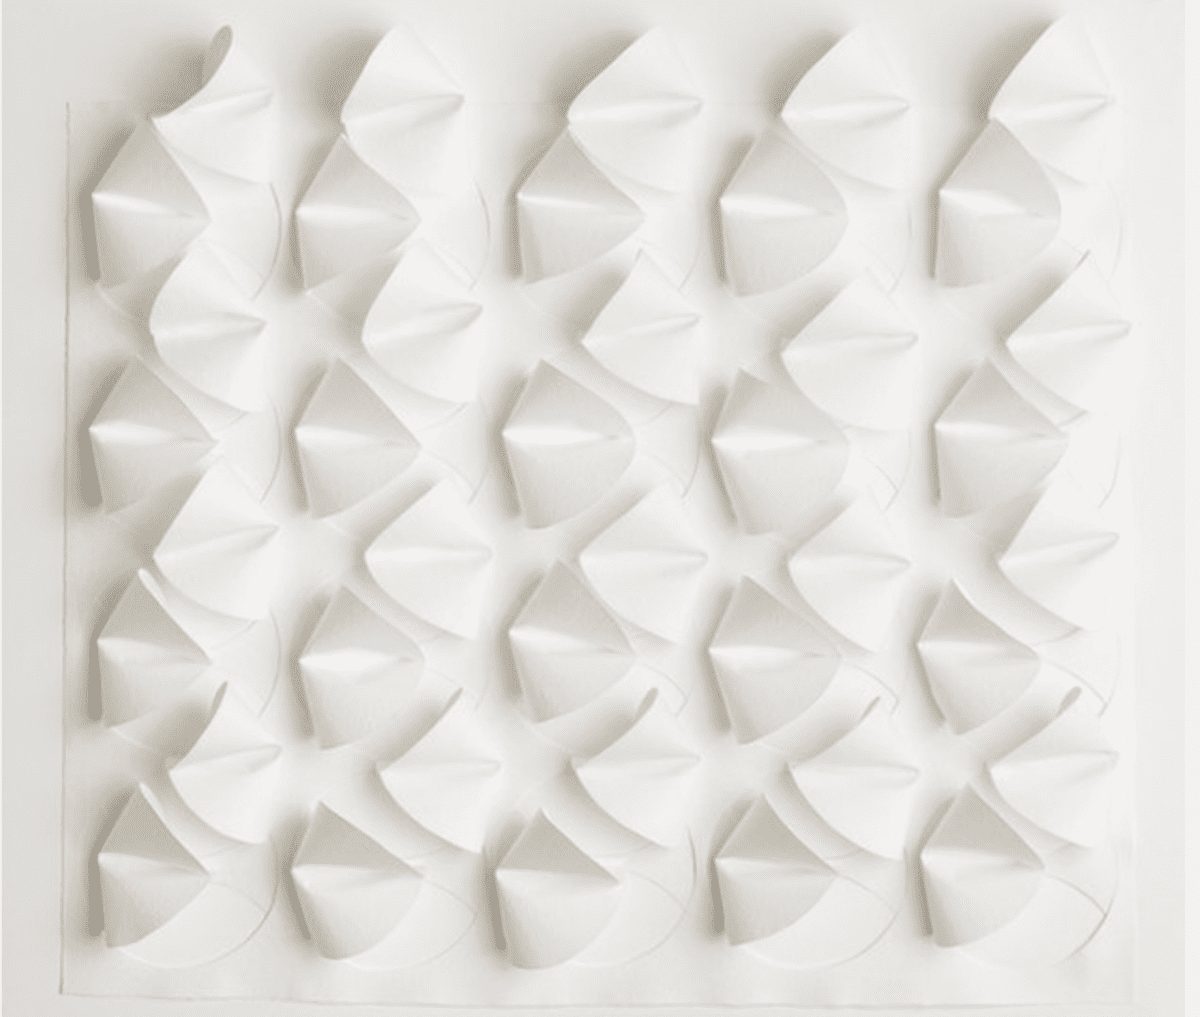 Liz Jaff, Blink, Hand-Cut paper on board, 18" x 19 3/4" x 1 5/8" (46cm x 50cm x 4cm), 2014.  